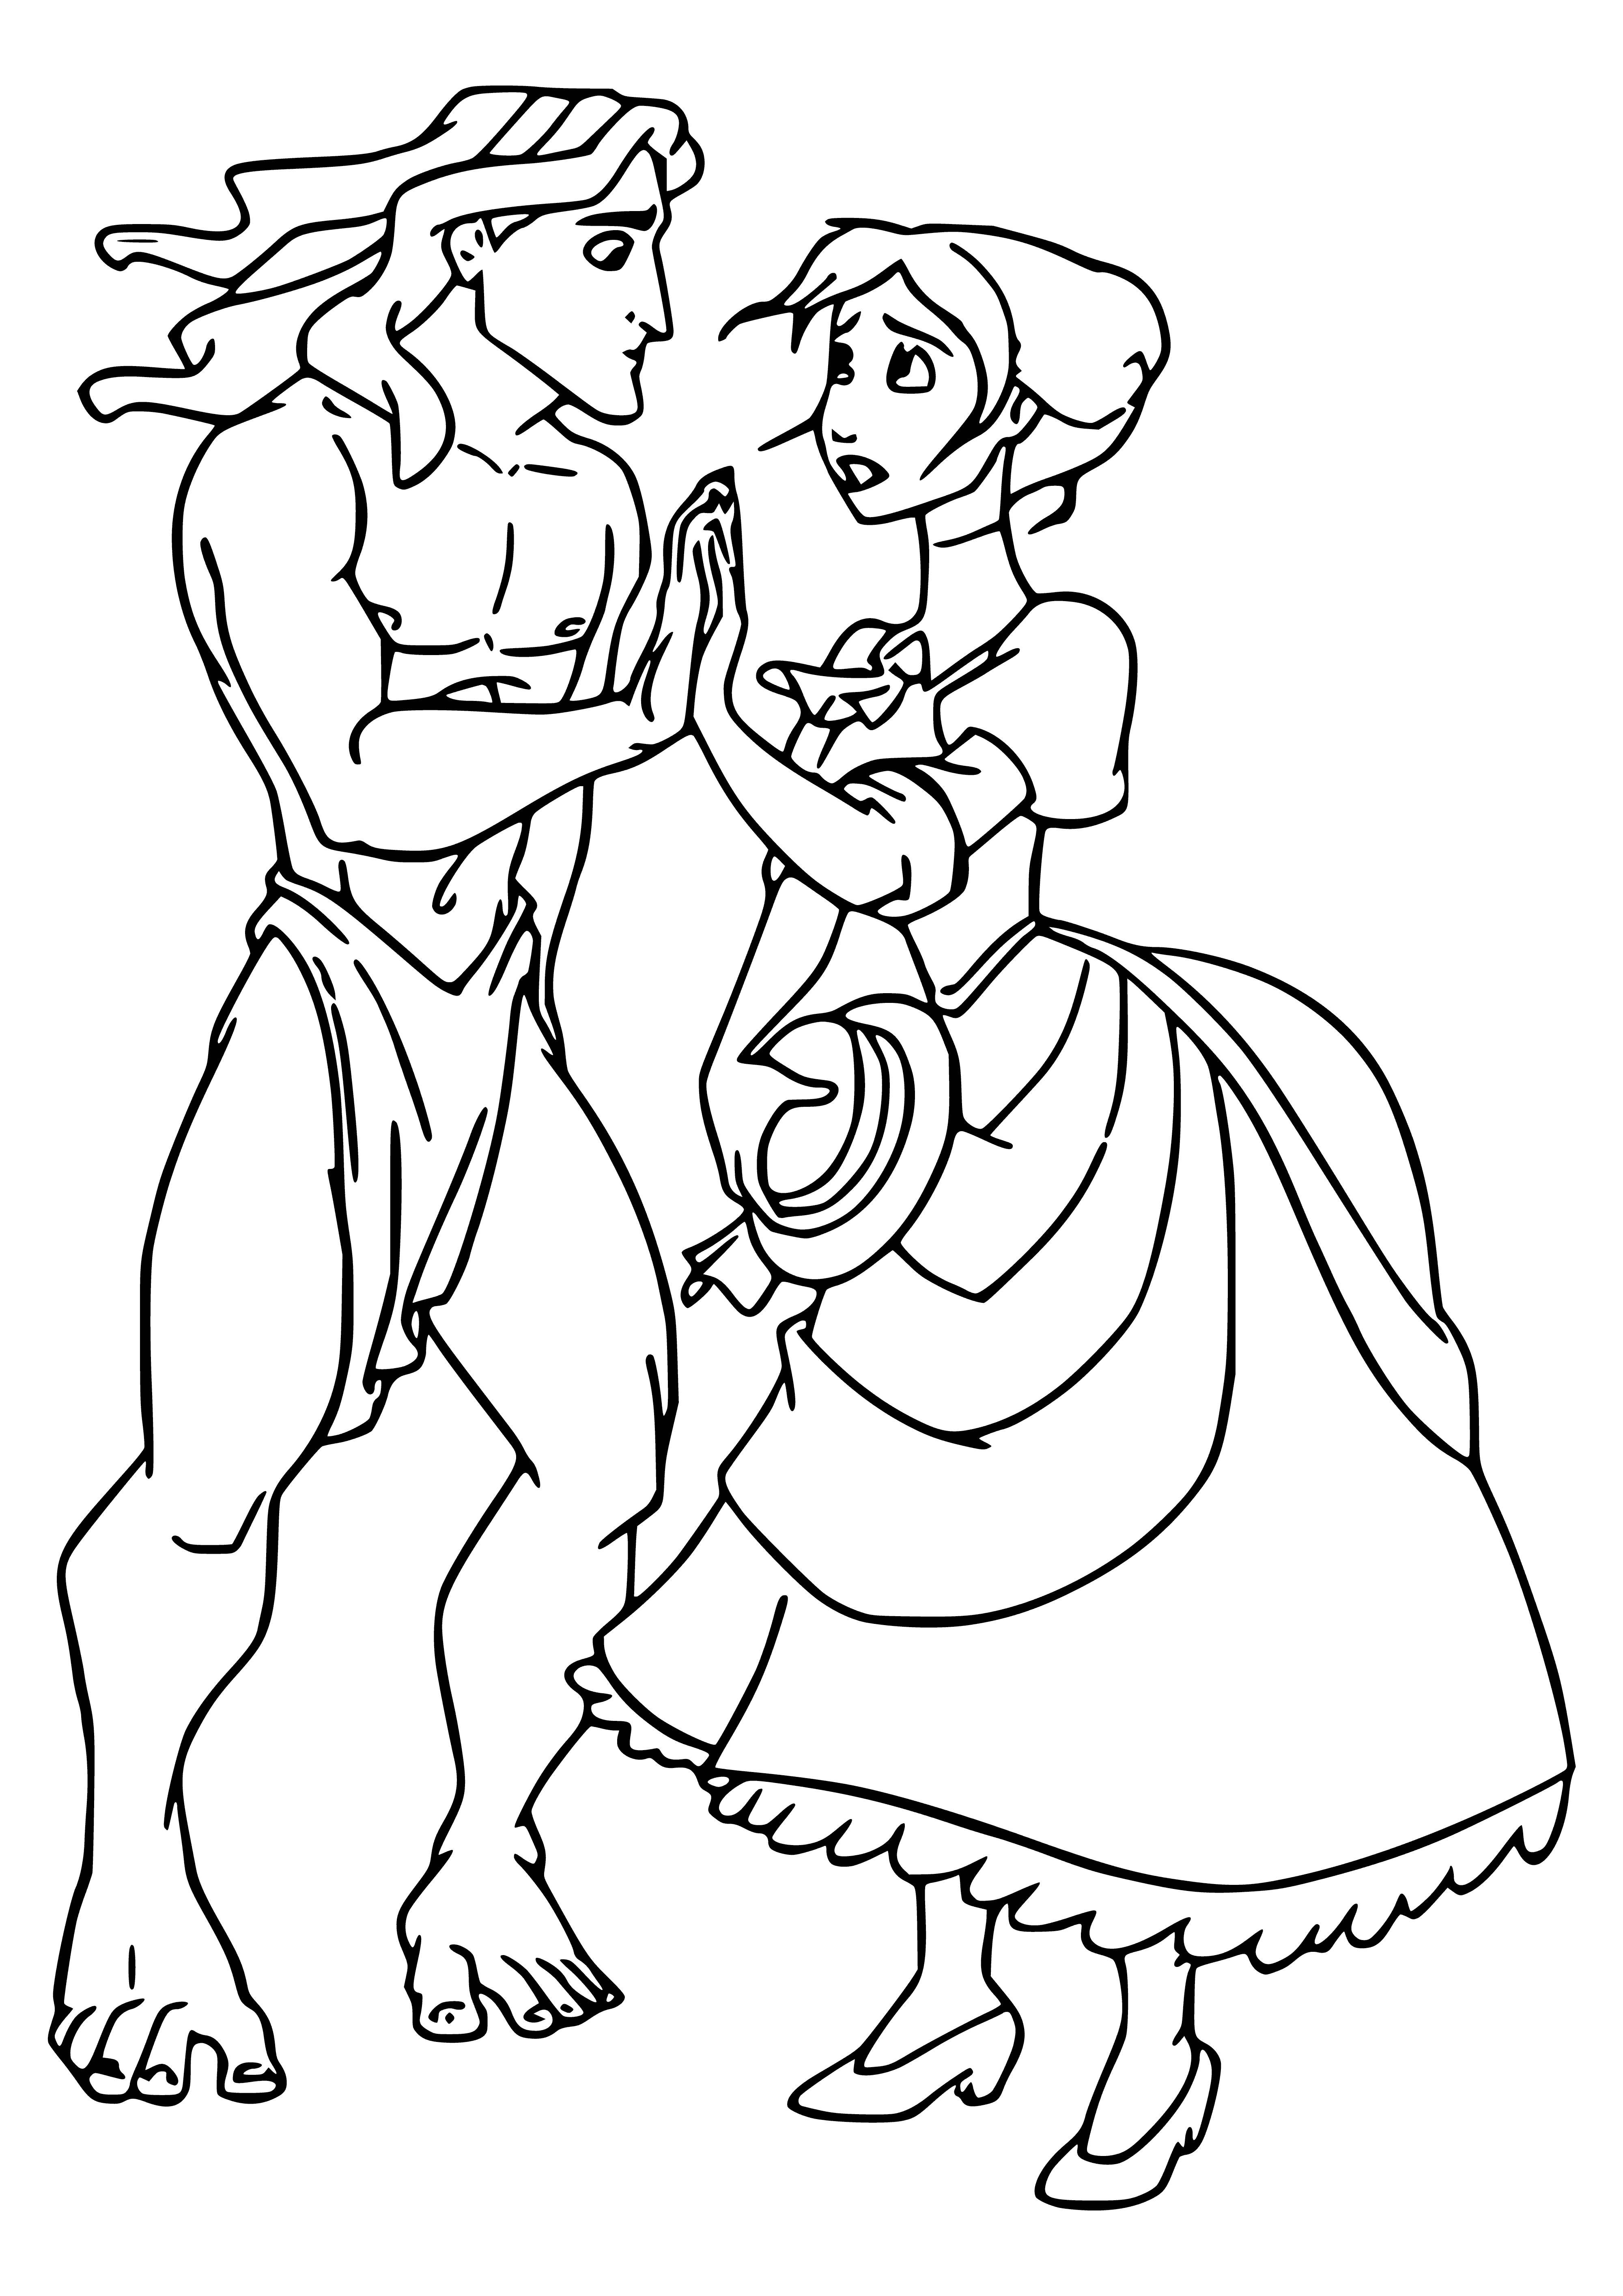 Tarzan and Jane coloring page